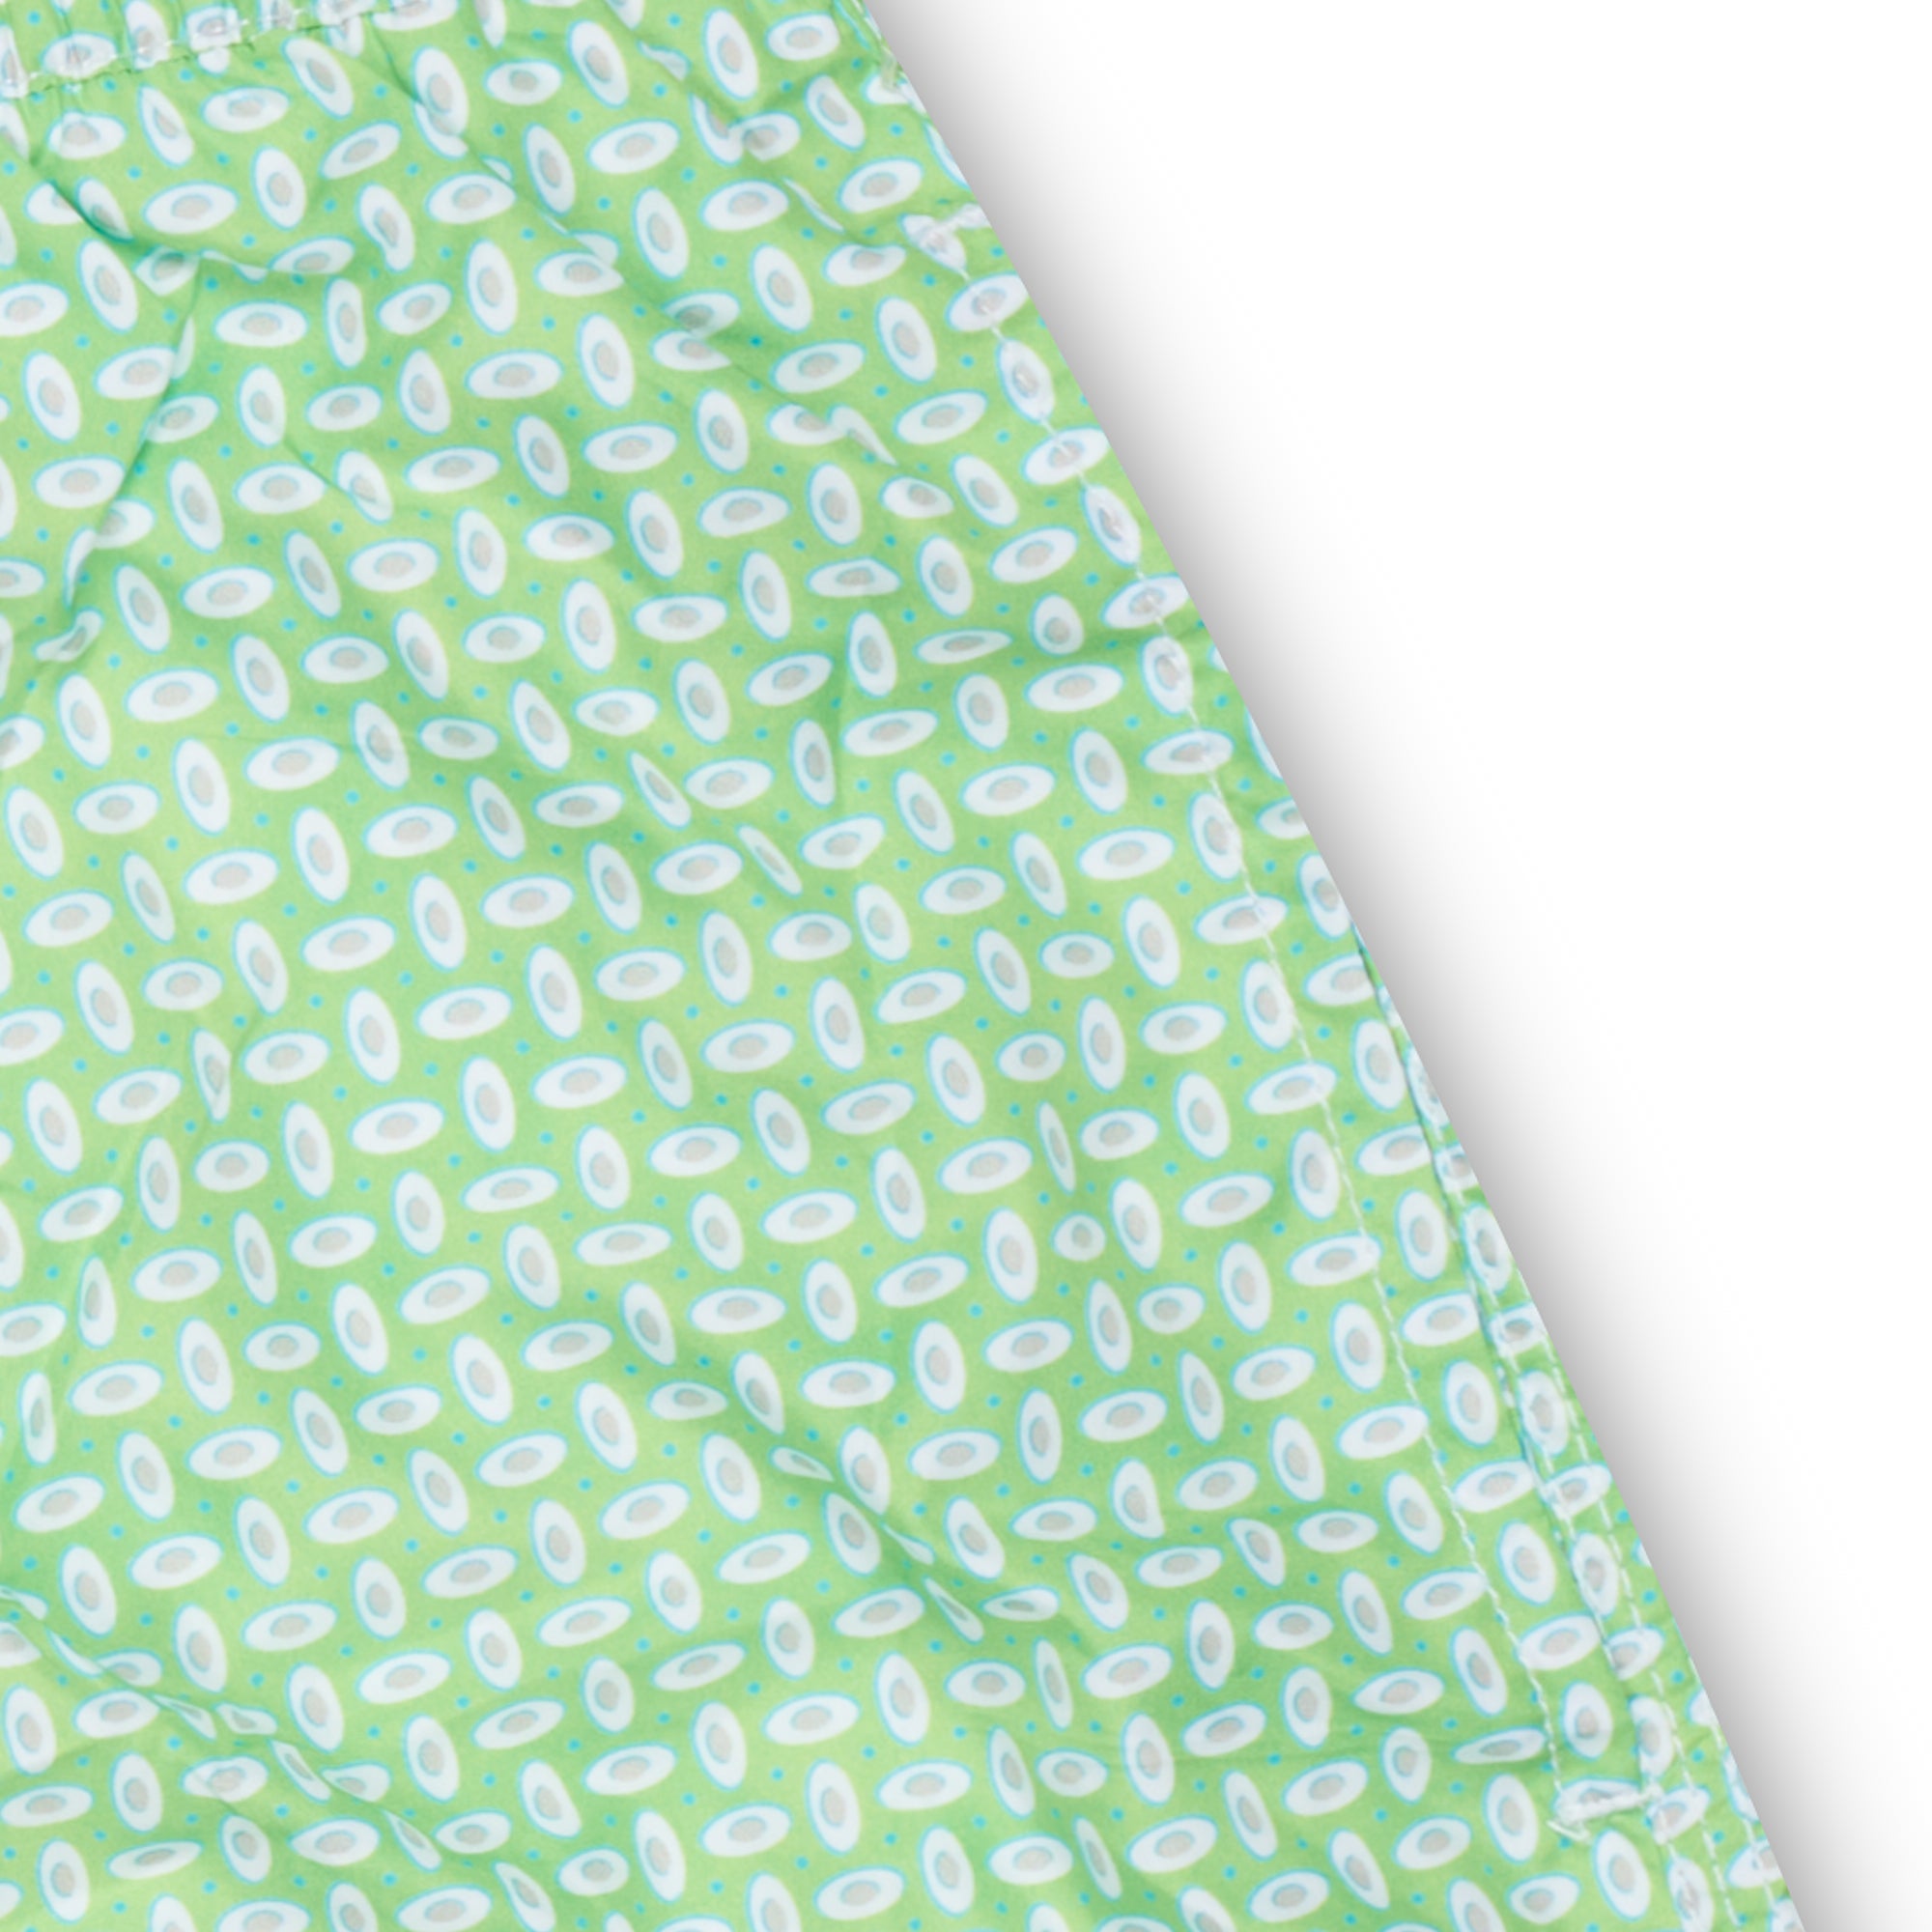 FEDELI Green Geometric Printed Madeira Airstop Swim Shorts Trunks NEW 2XL FEDELI